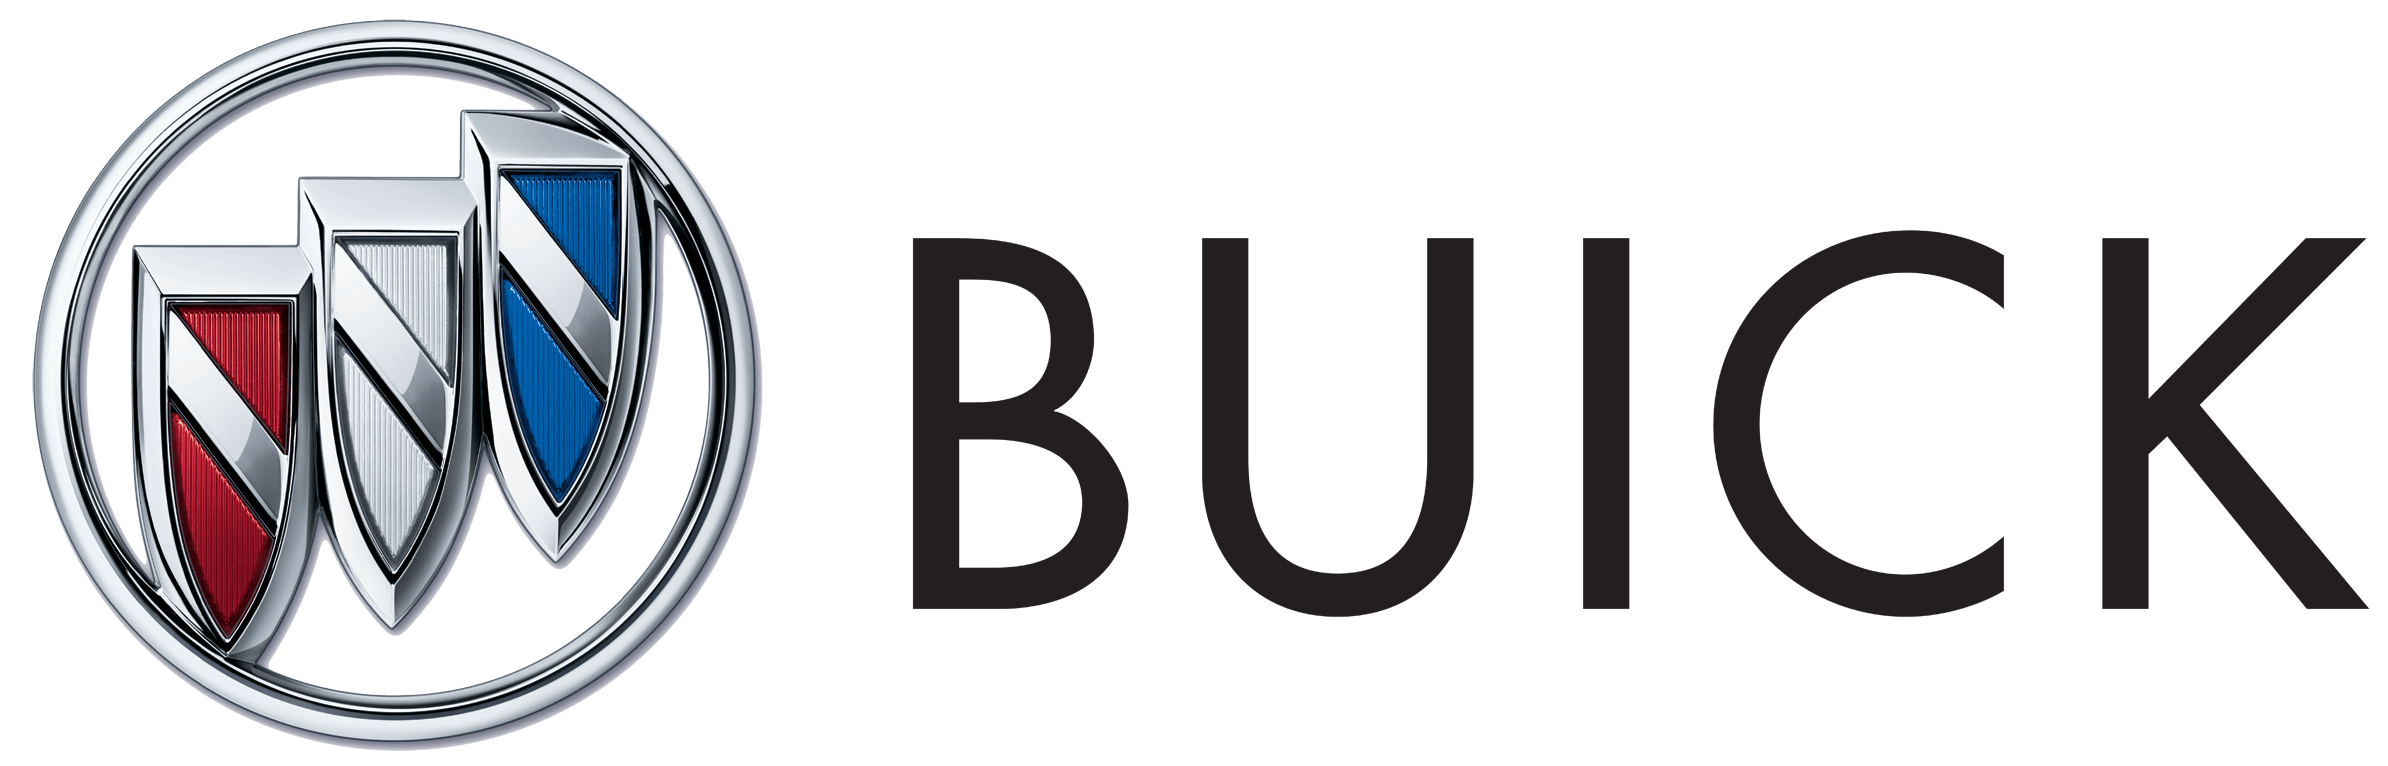 Buick Logo - Buick | Logopedia | FANDOM powered by Wikia